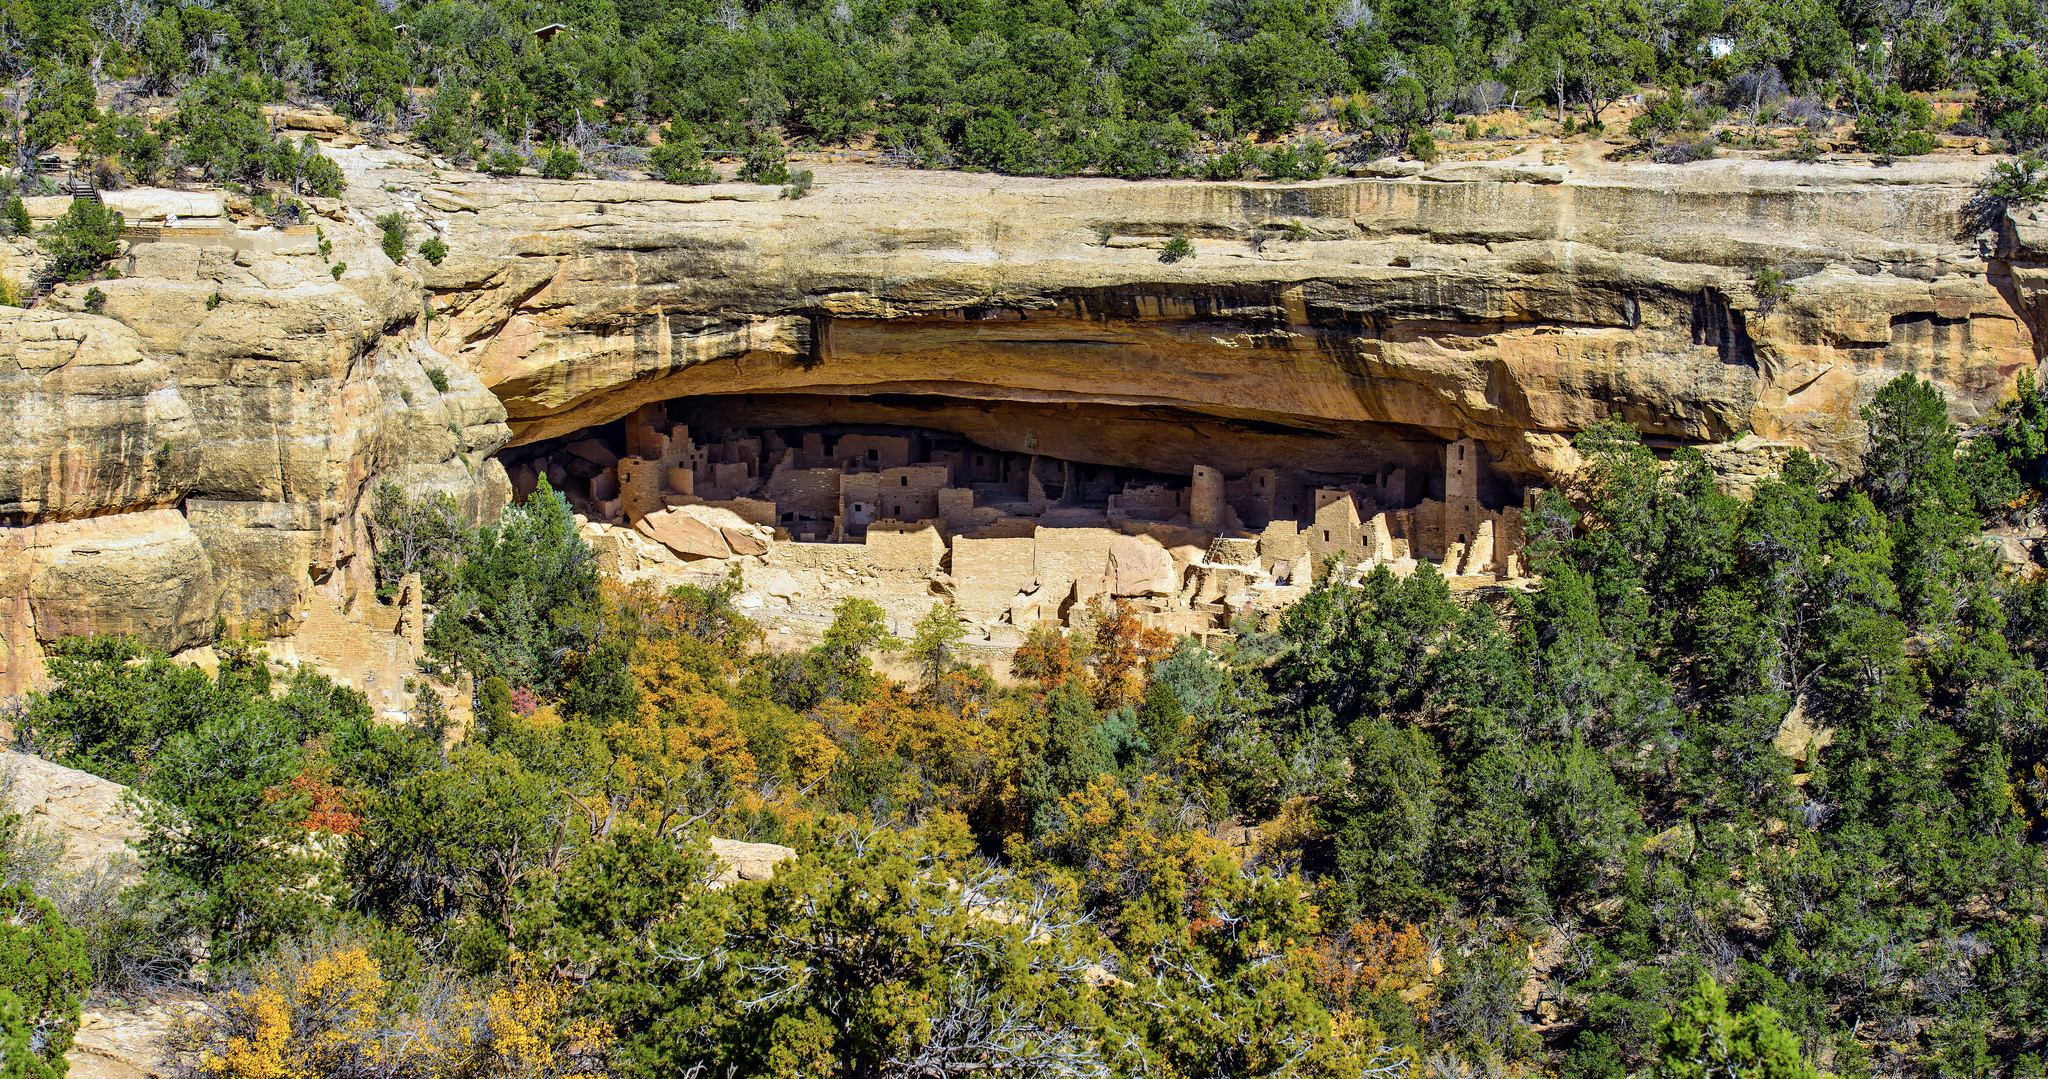 DNA links present-day Pueblo populations to ancestral homeland at Mesa Verde